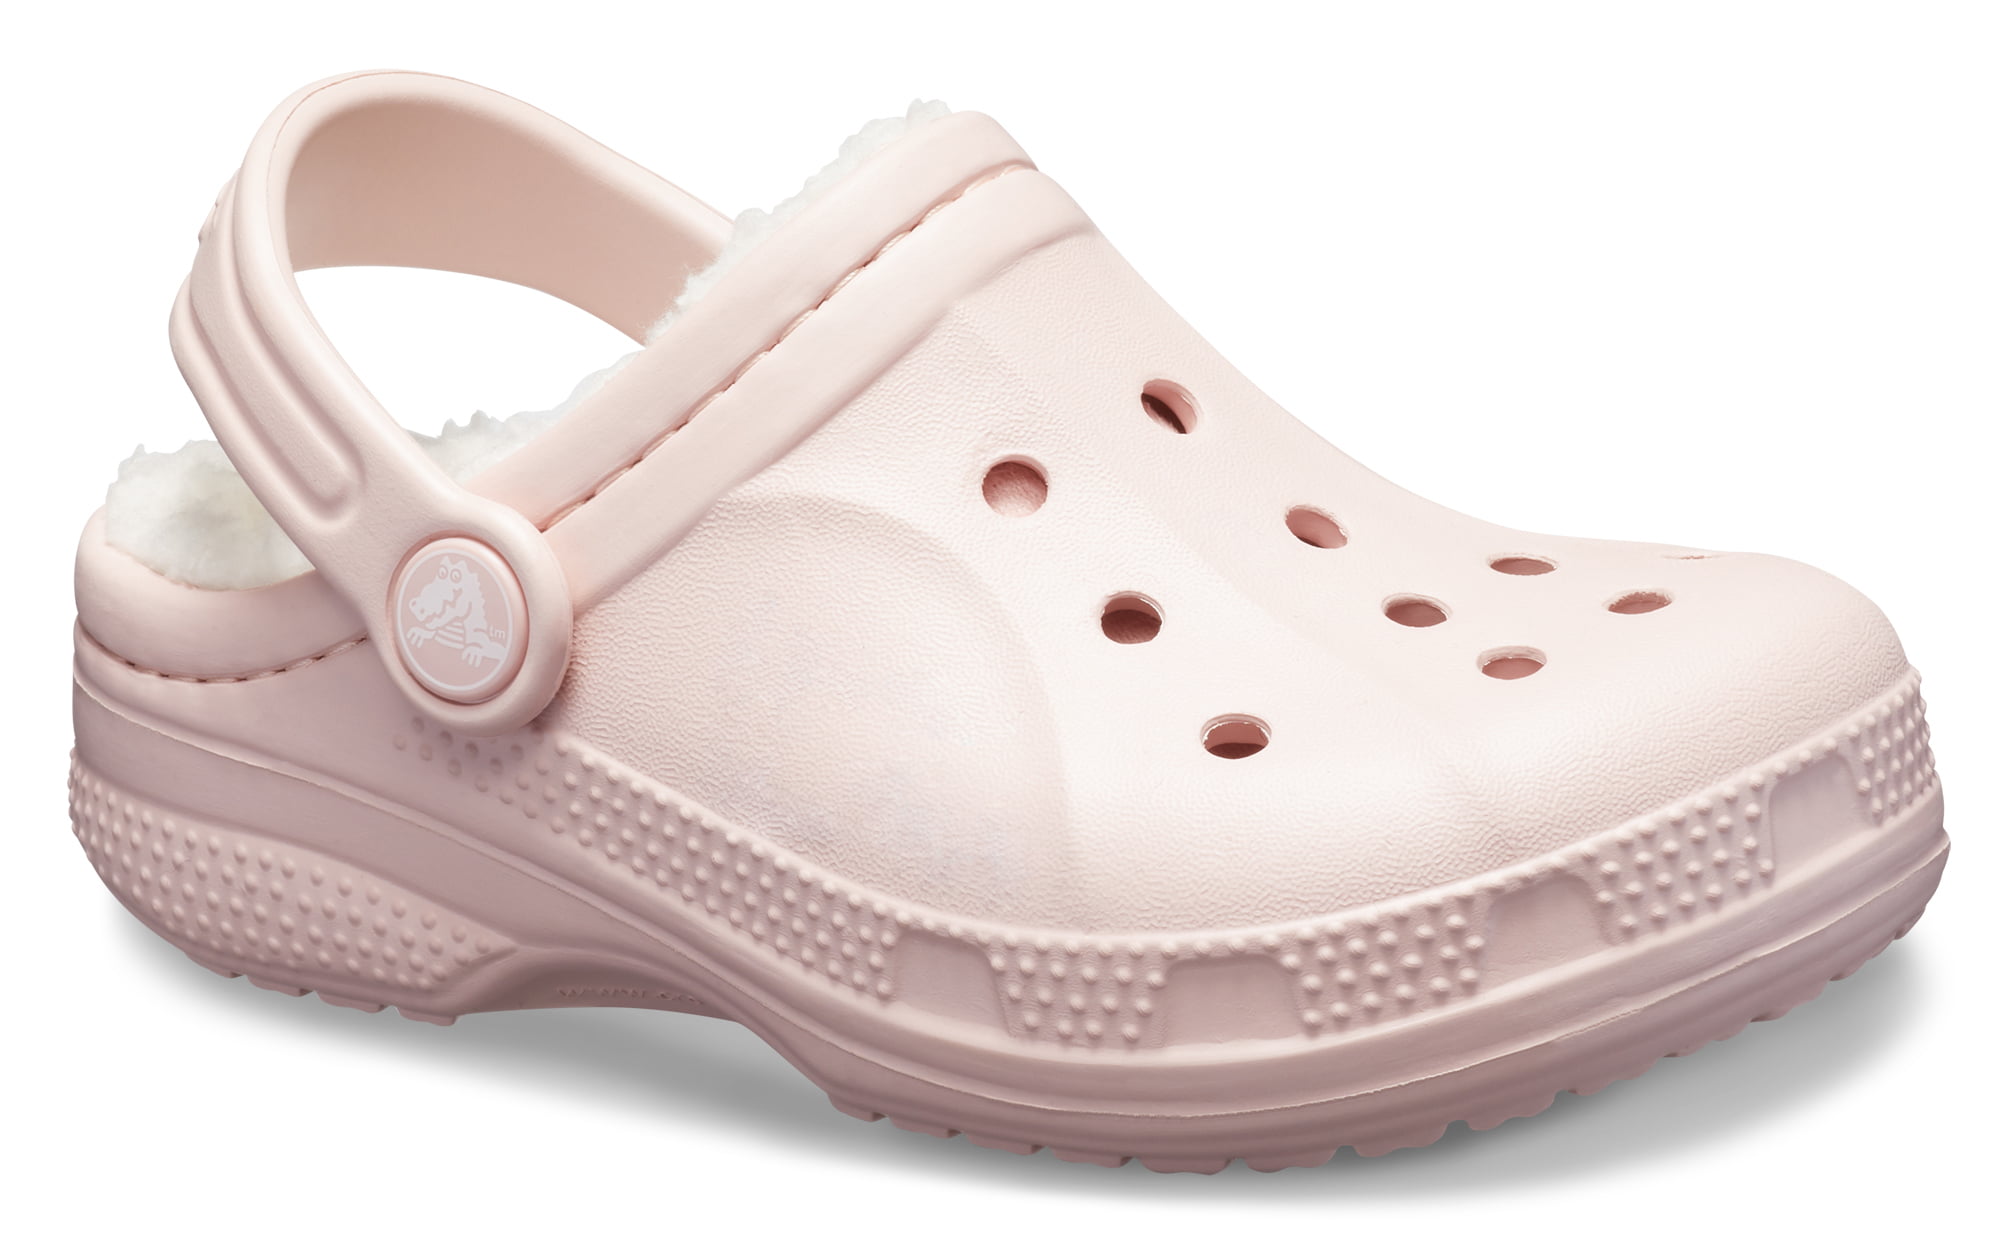 pink lined crocs